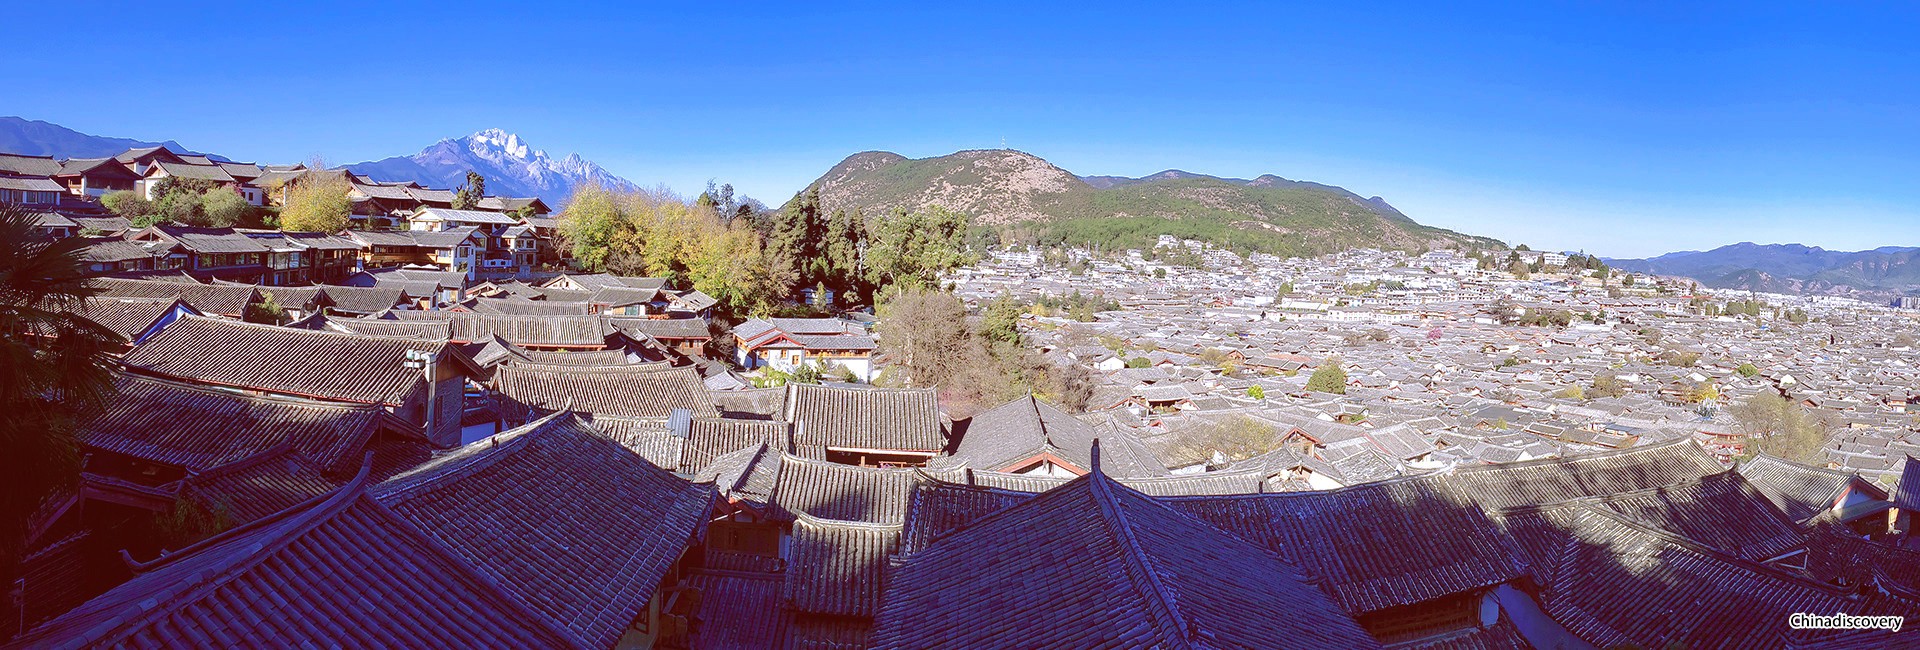 9 Days Guilin Karst Landscape & Diverse Yunnan Tour